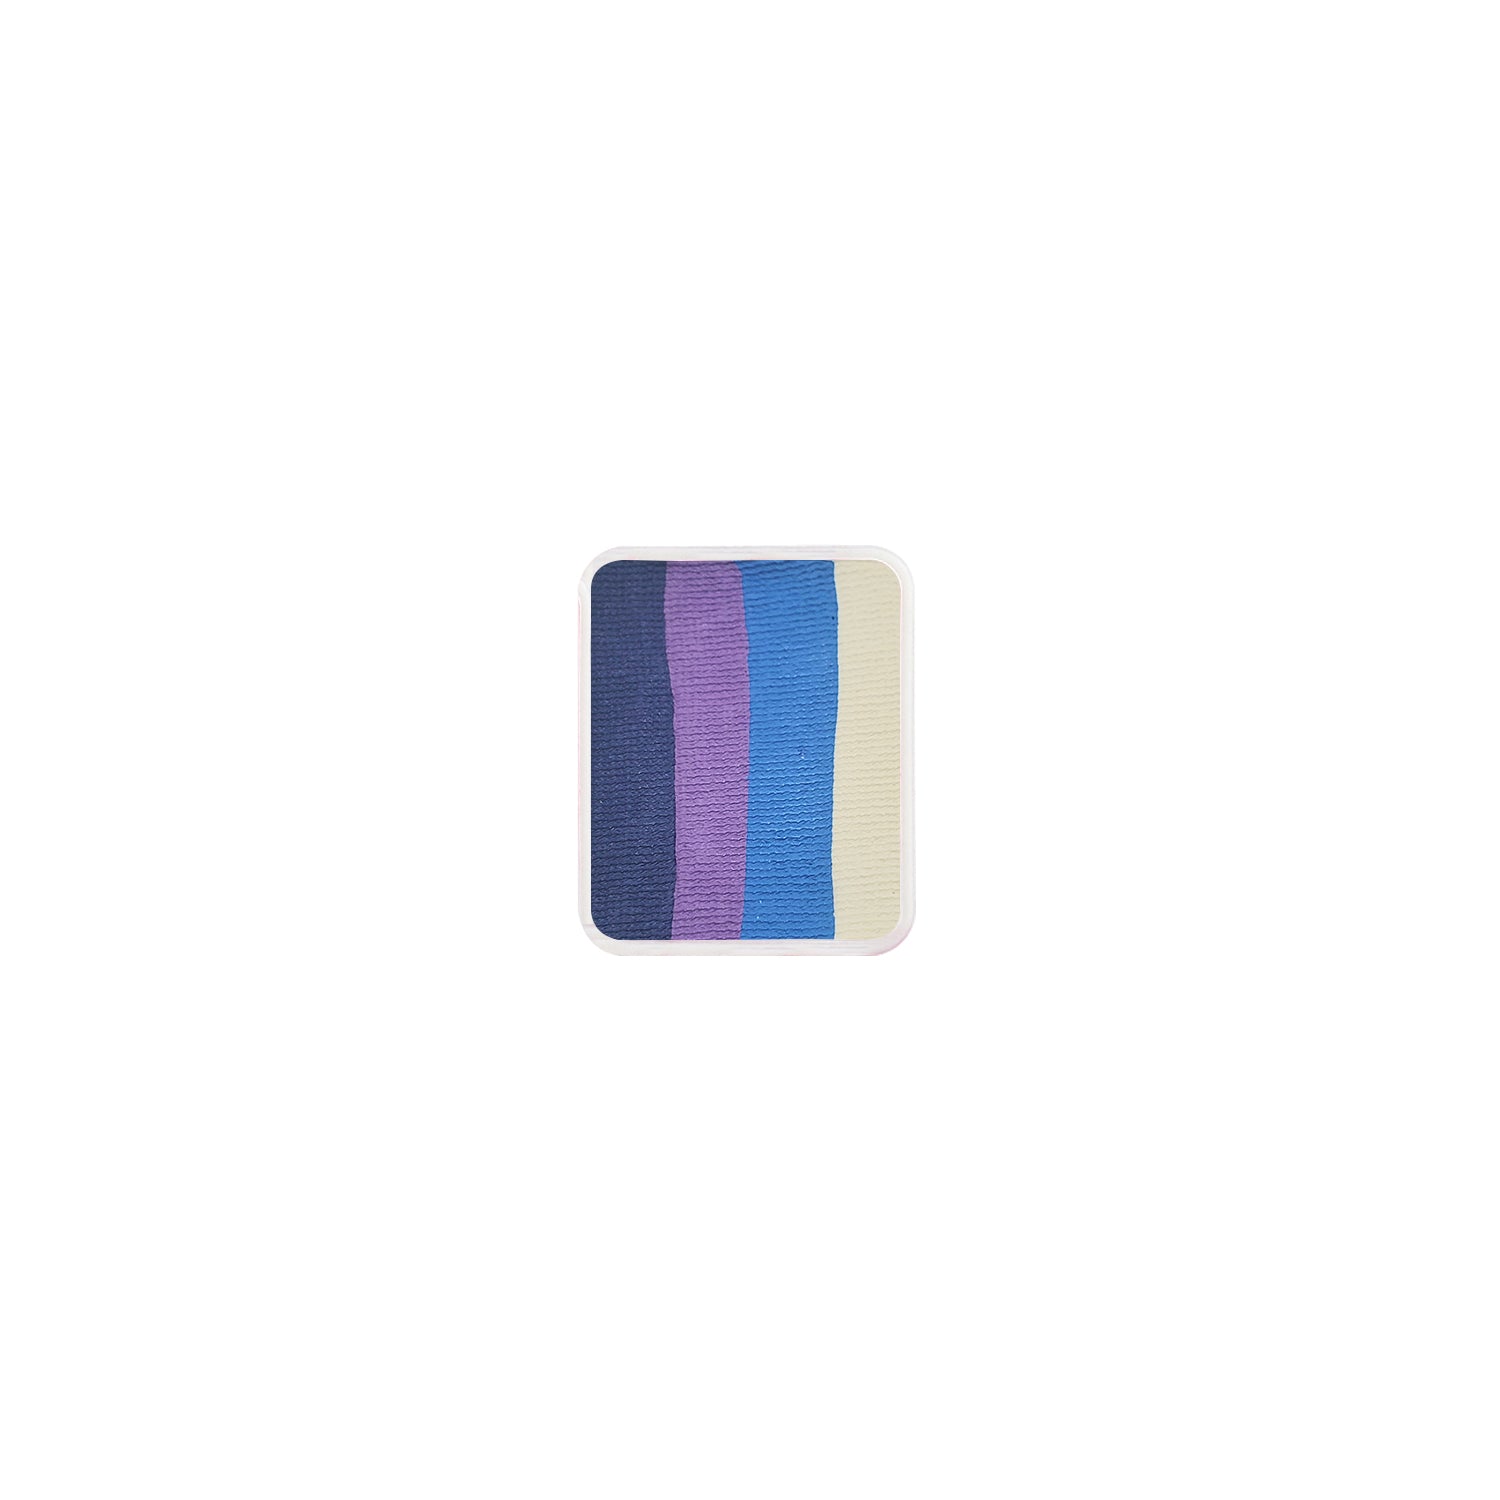 Kraze FX One Stroke Palette Refill - Neon Twilight (0.21 oz/6 gm)